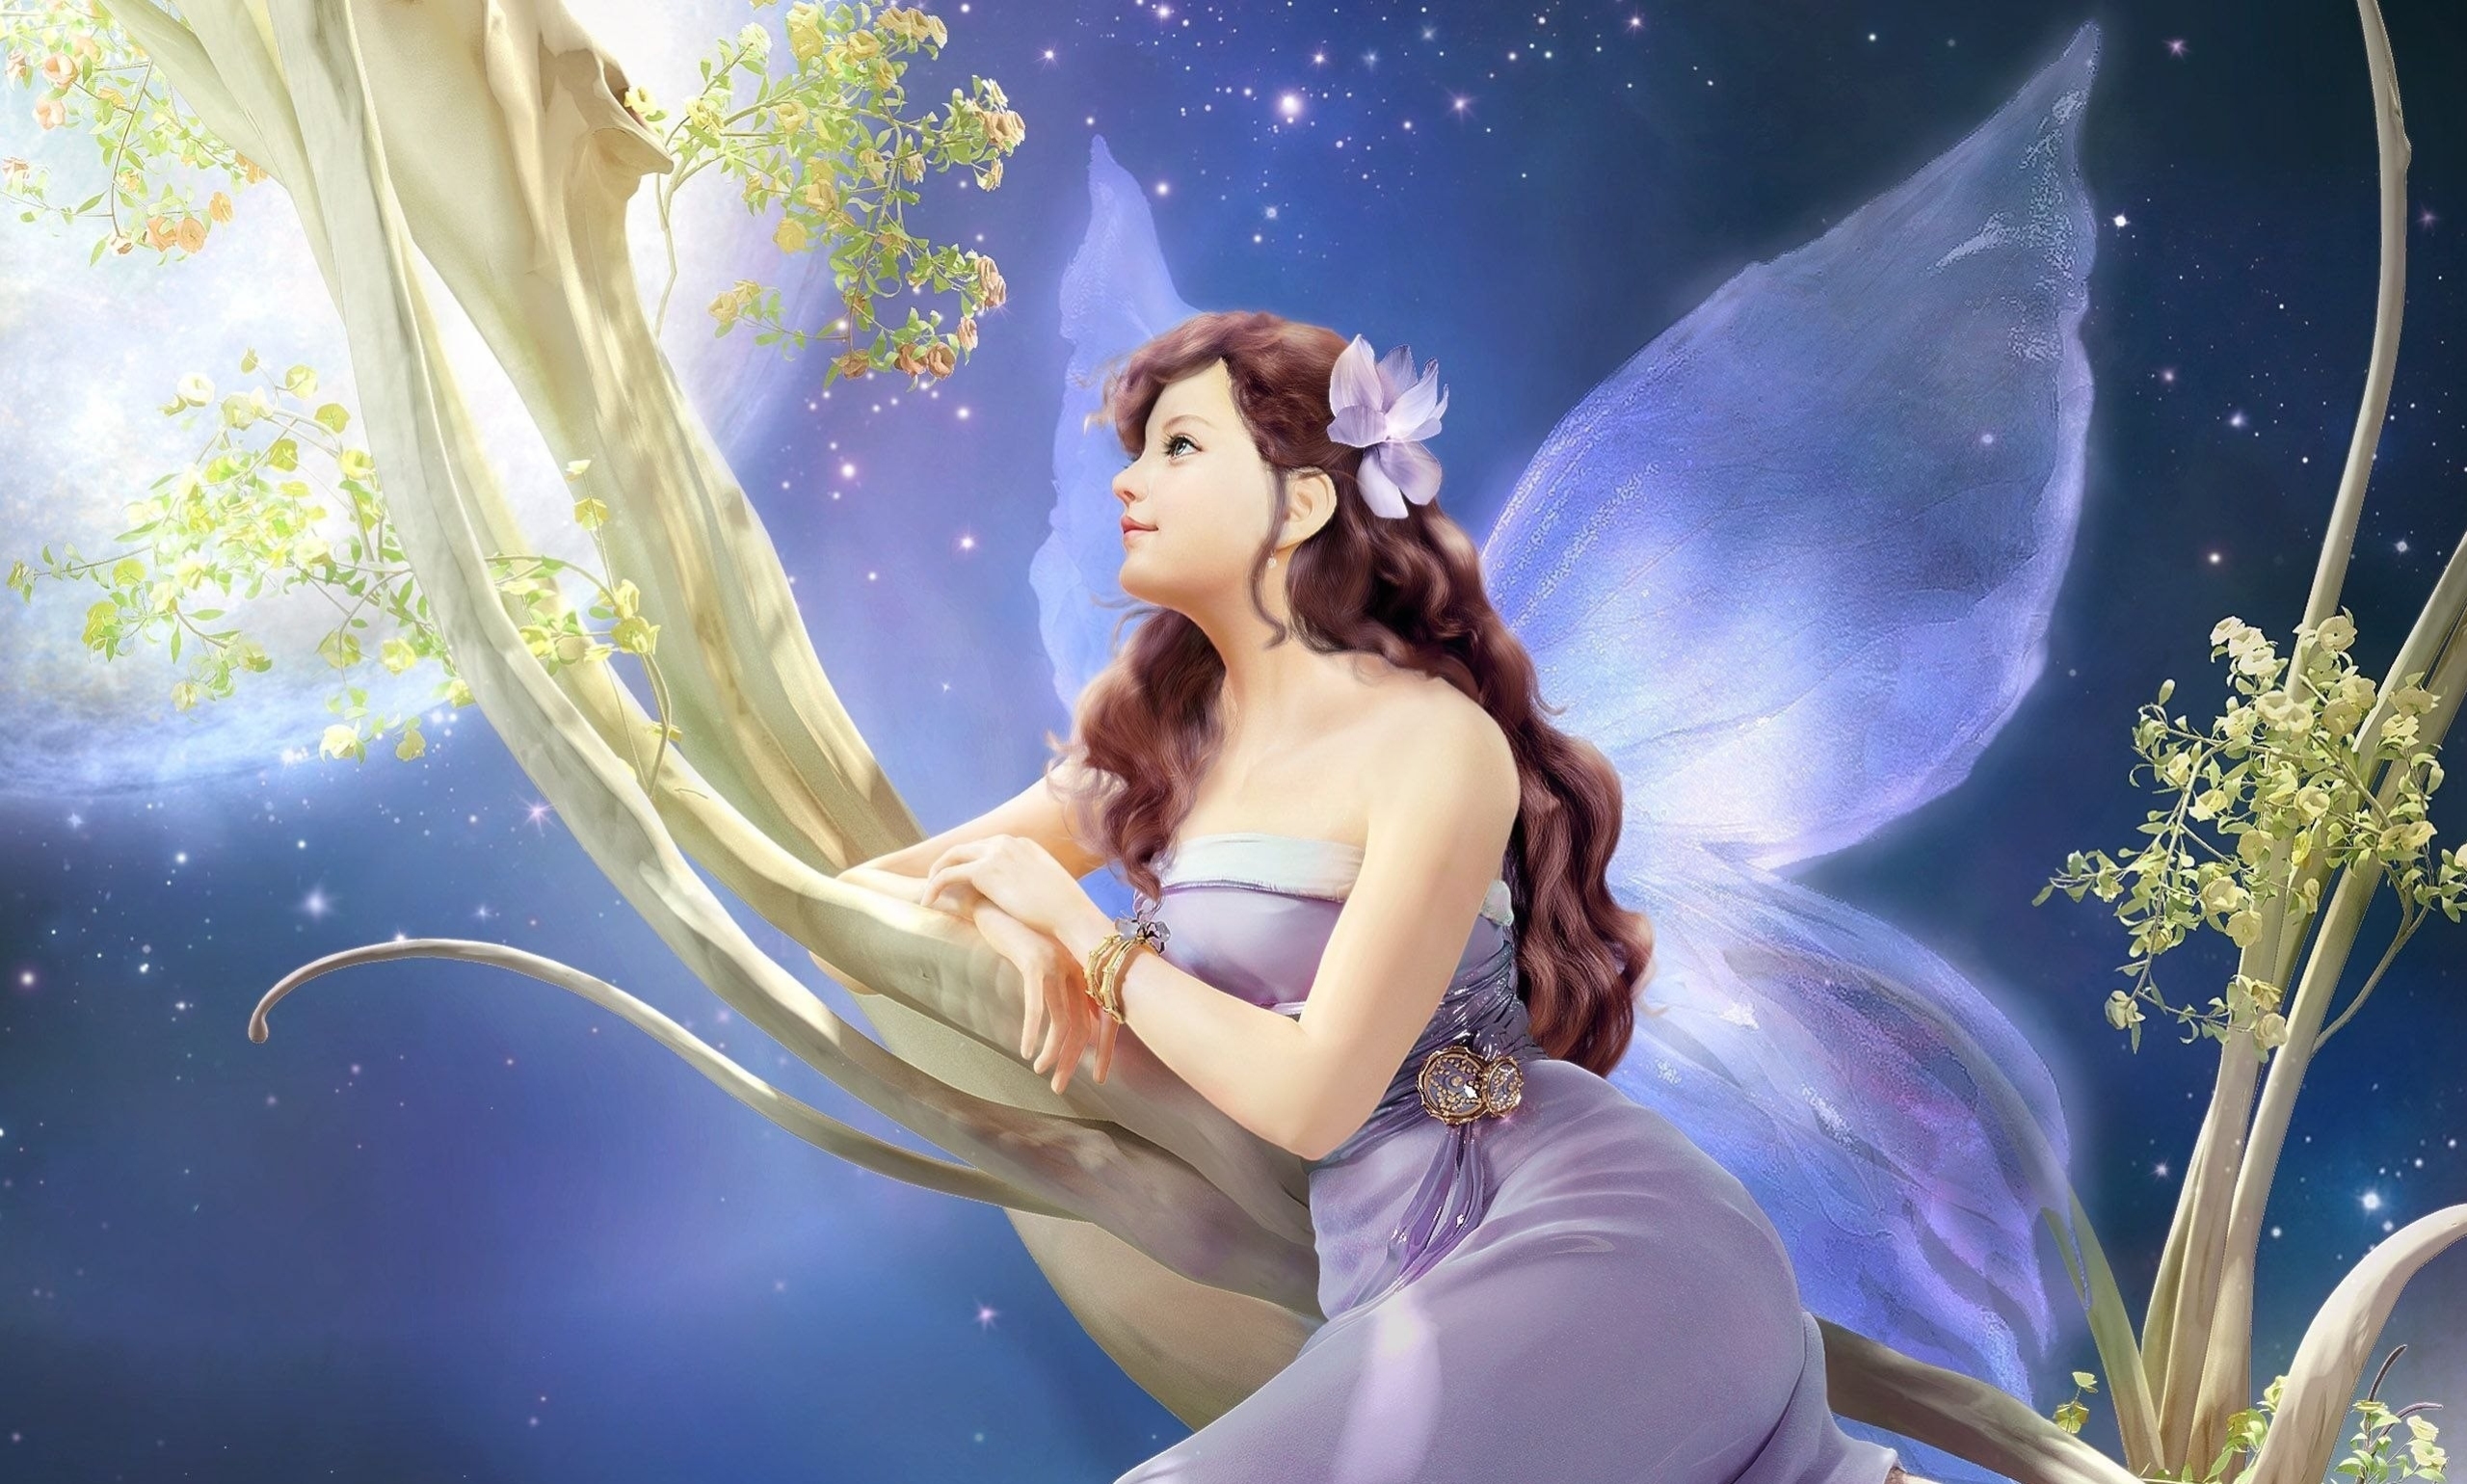 fairy, girl, fantasy, wood, tree lock screen backgrounds